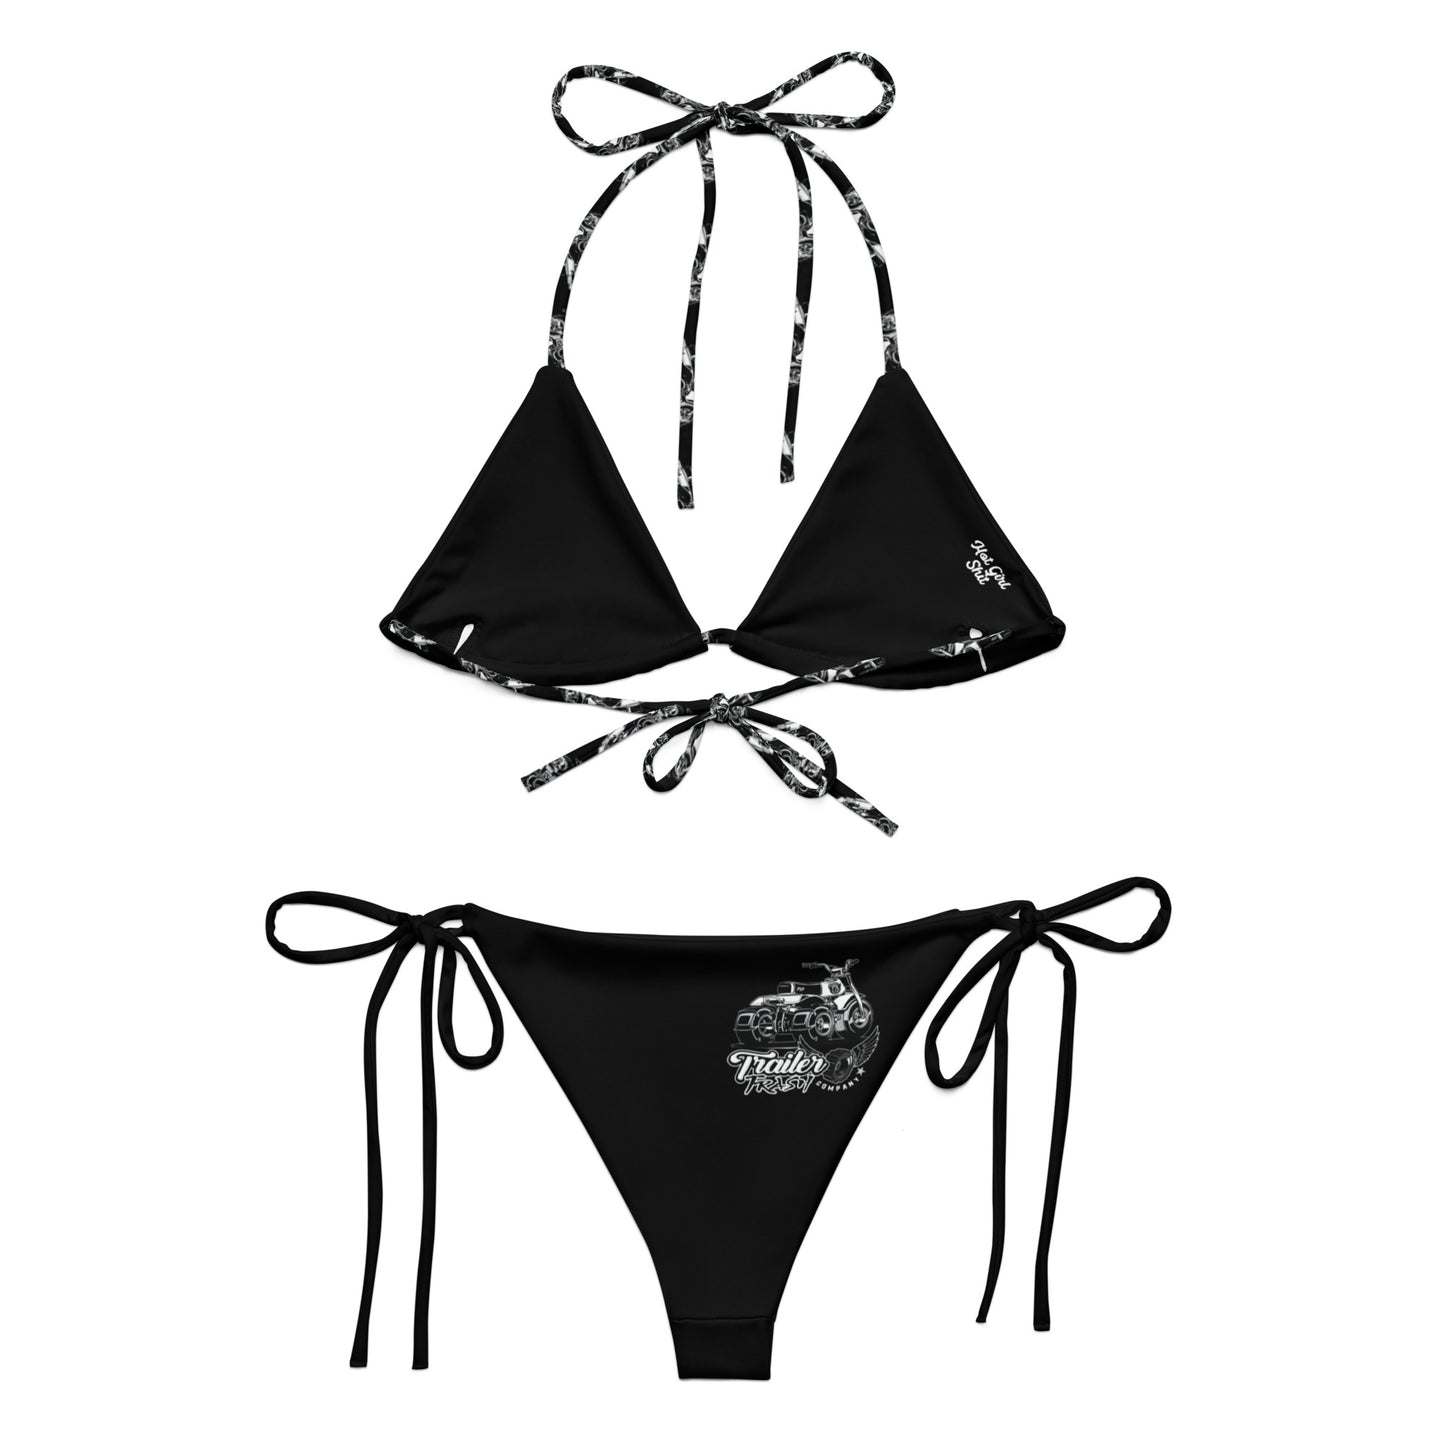 ATC 70 String Bikini - Black and White